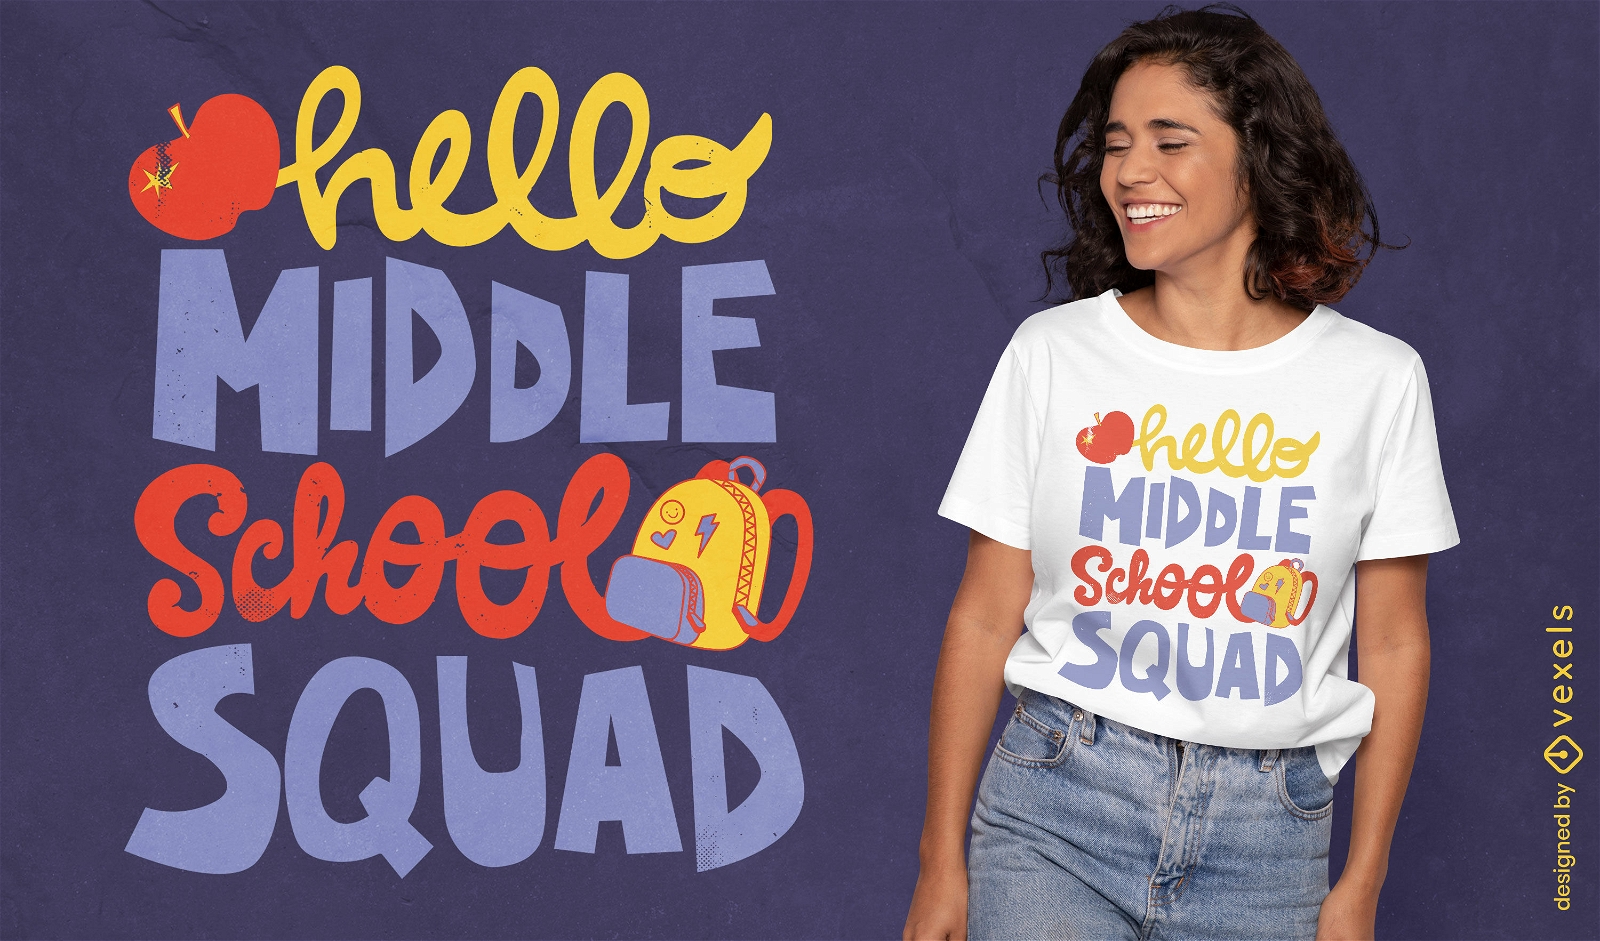 Middle school squad t-shirt design